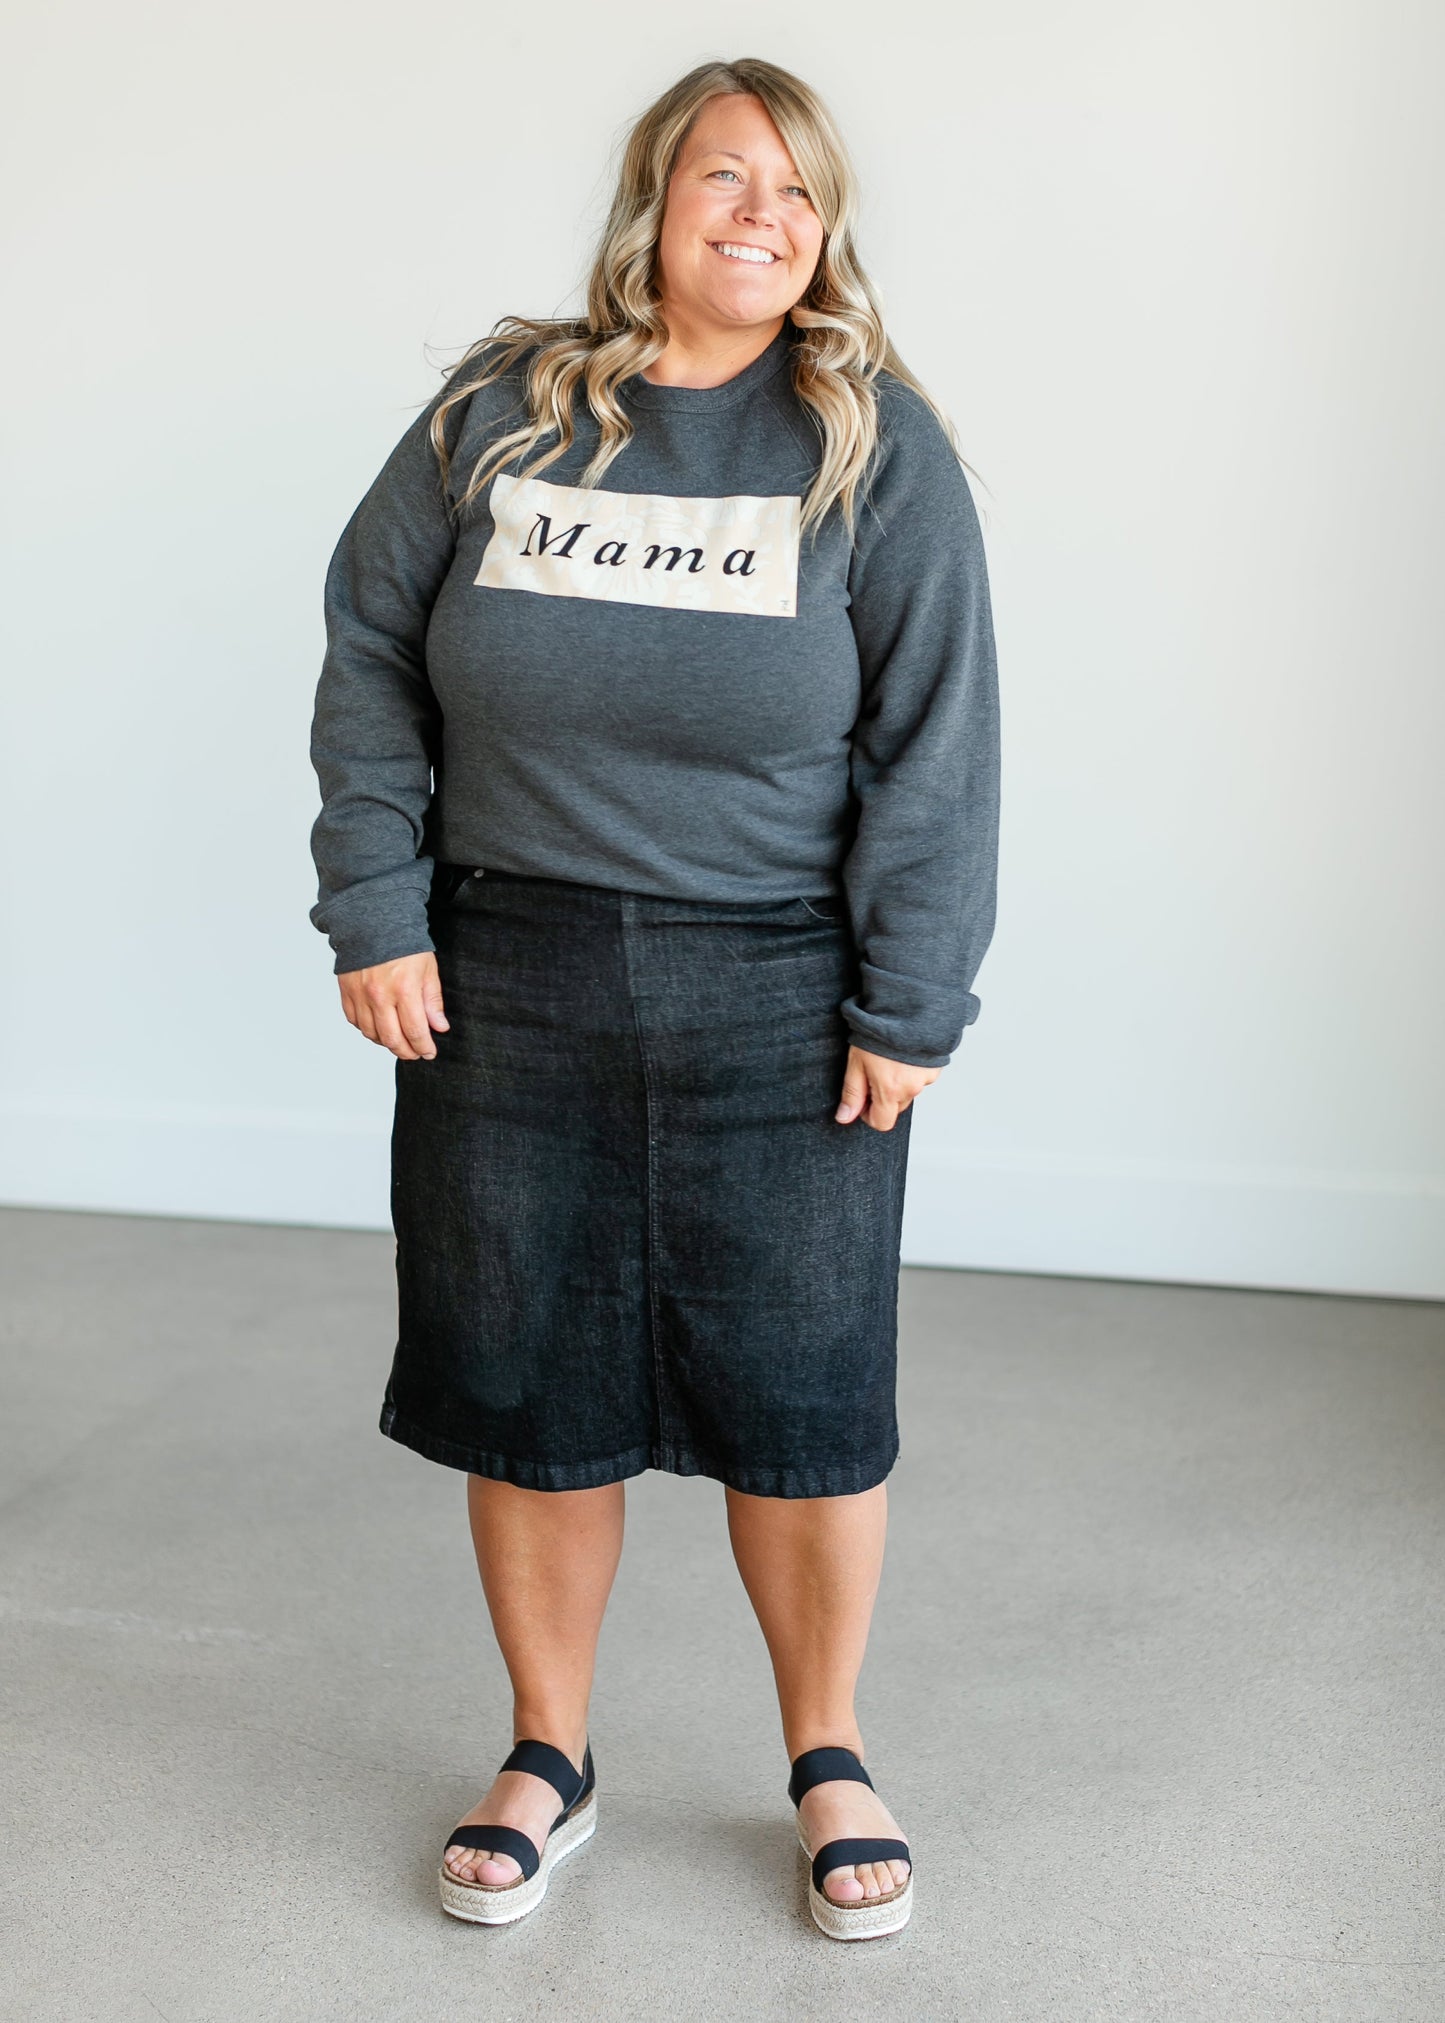 Mama Graphic Crewneck Sweatshirt IC Tops